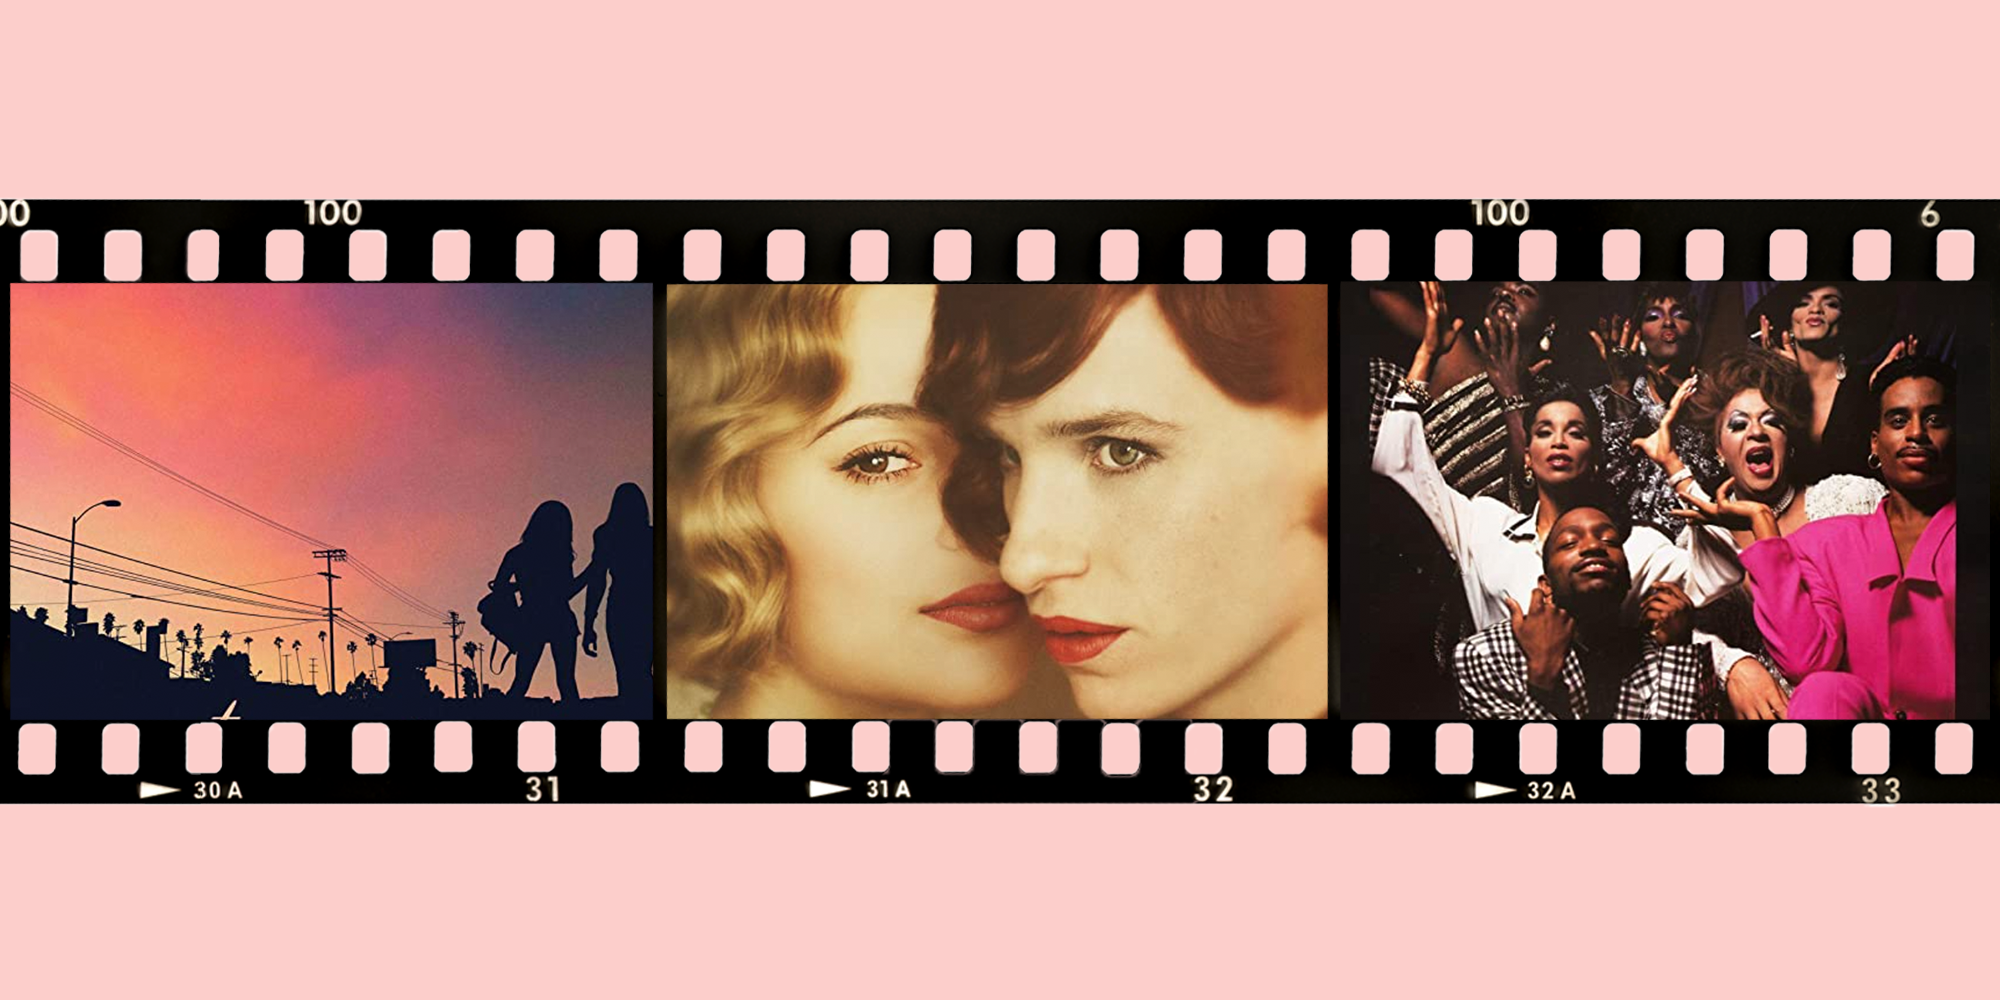 15 Best Transgender Movies - Films & Documentaries with Trans People